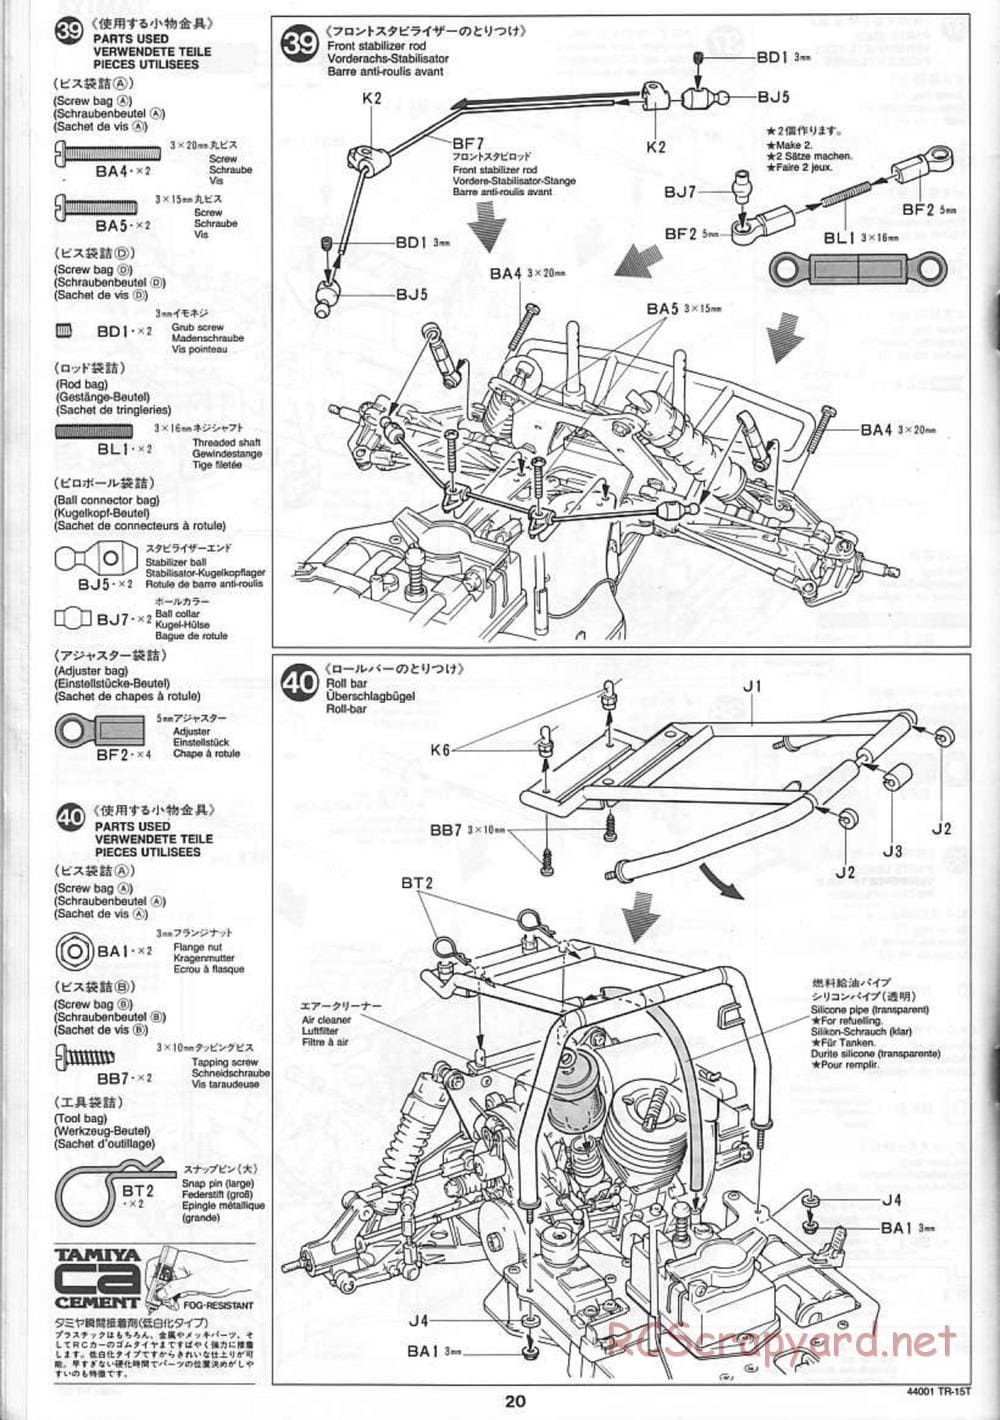 Tamiya - Stadium Racing Truck TR-15T Chassis - Manual - Page 20